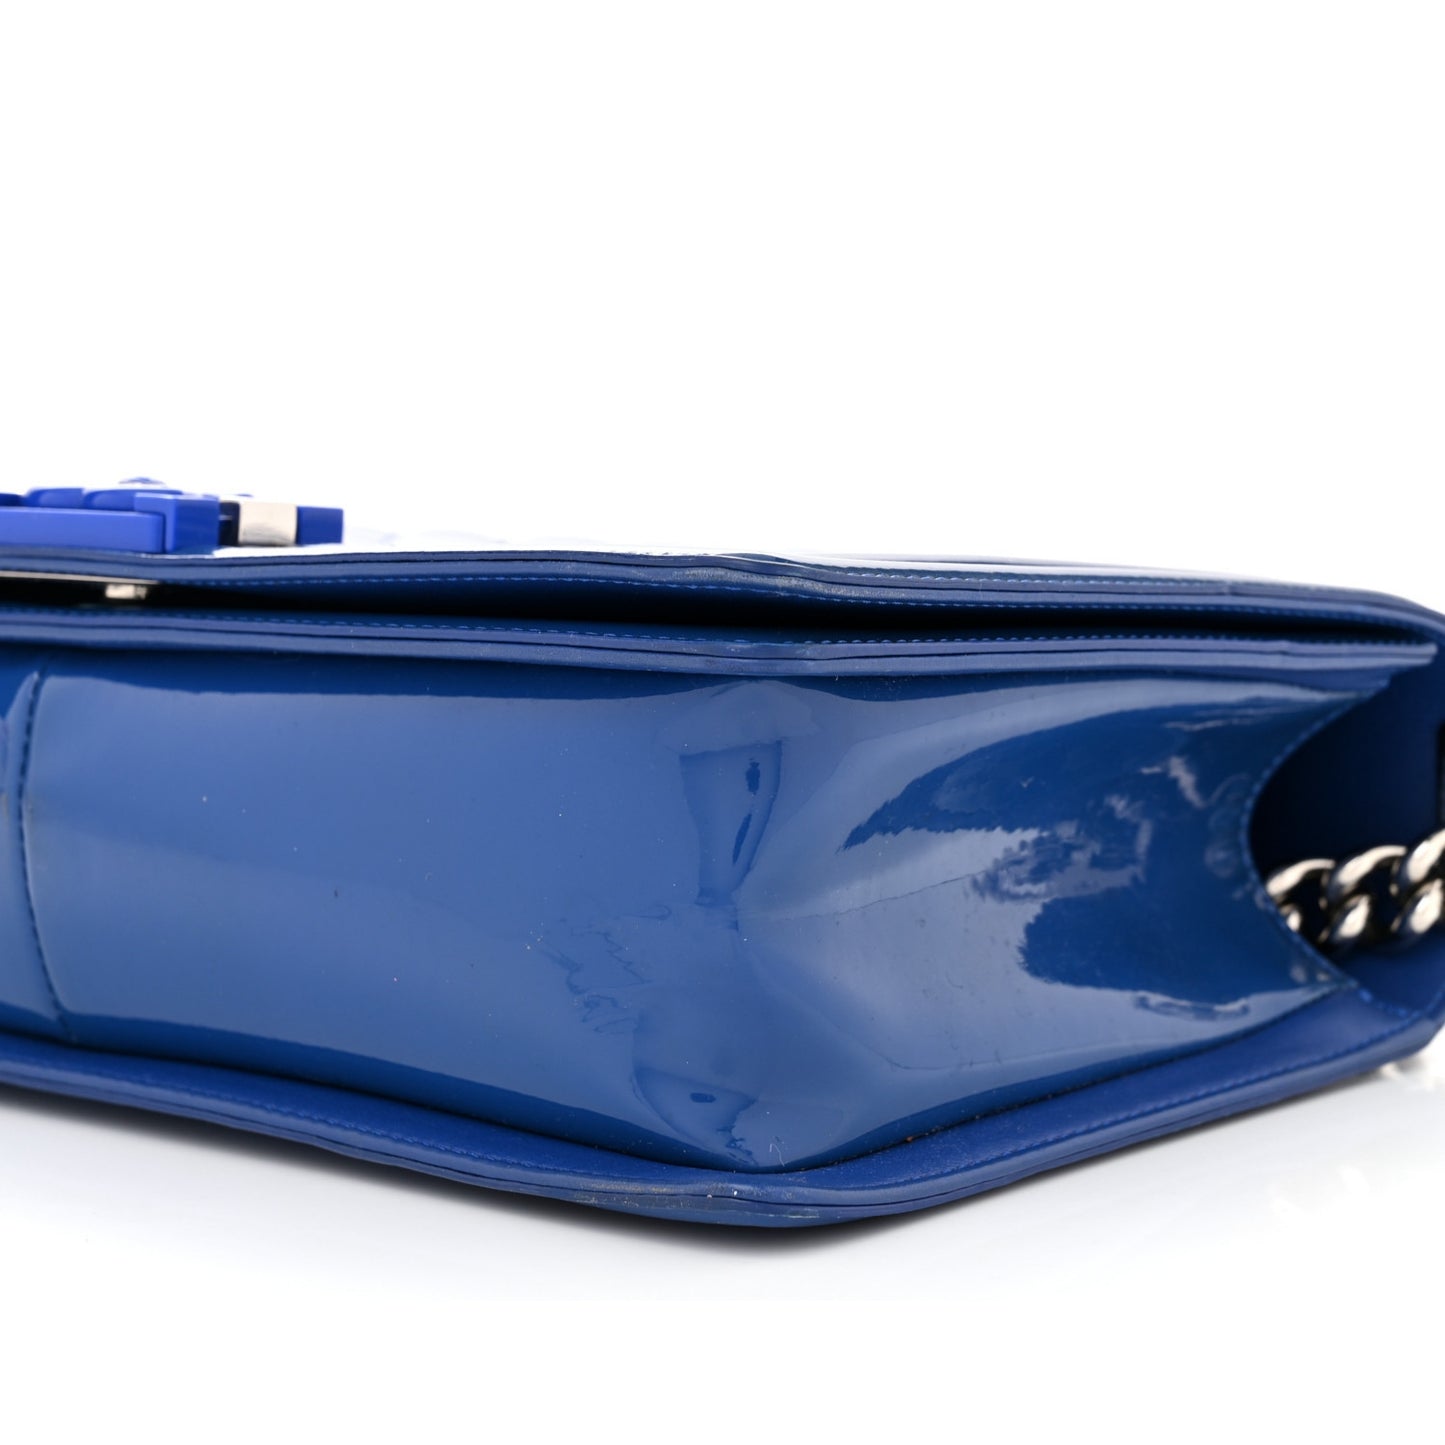 Blue Quilted Patent Leather New Medium Plexiglass Boy Bag